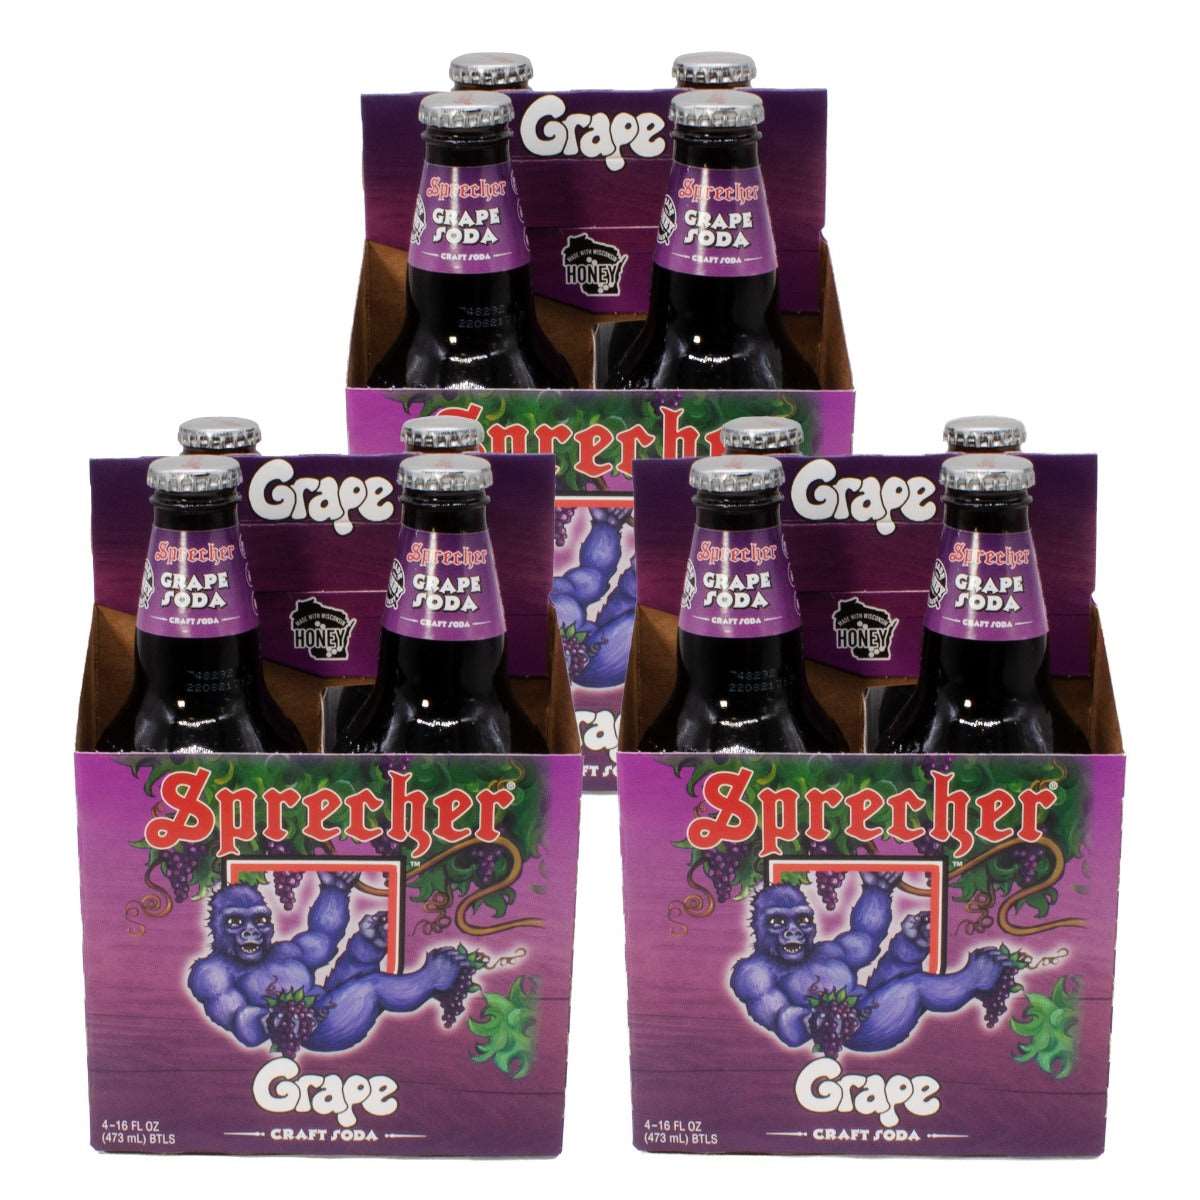 3 4-packs of Sprecher Grape Soda